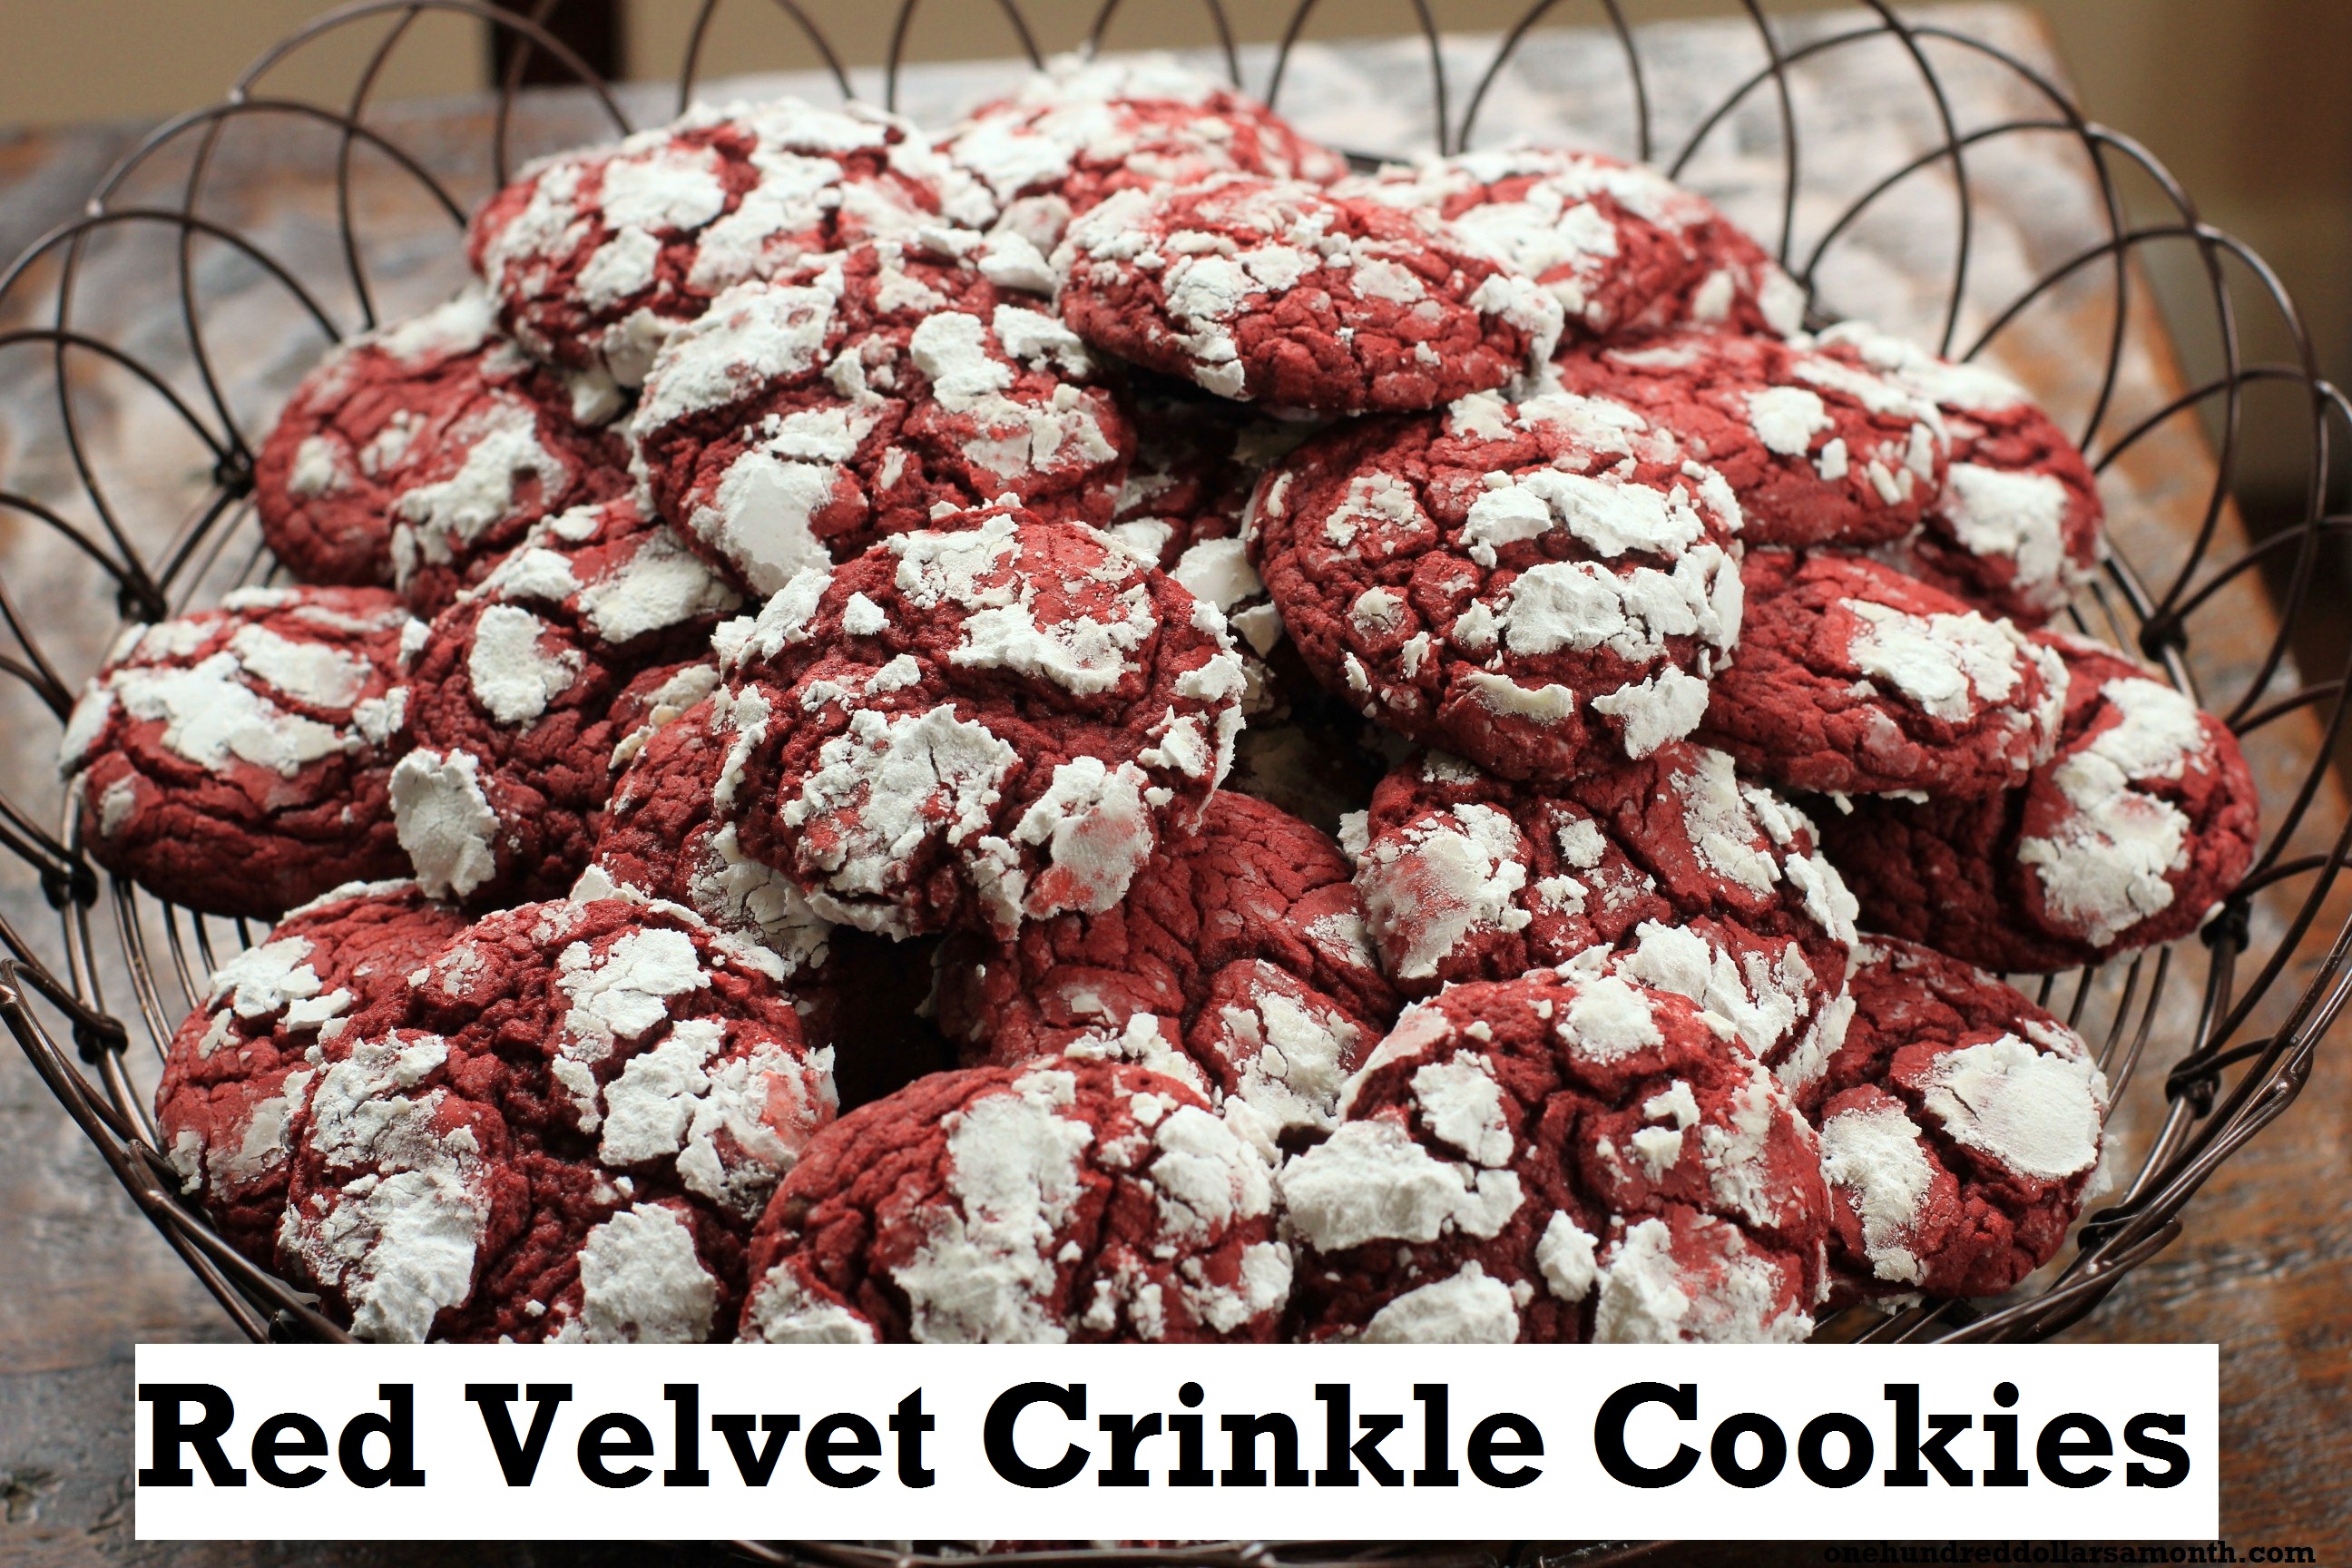 Recipe: How to Make Red Velvet Crinkle Cookies